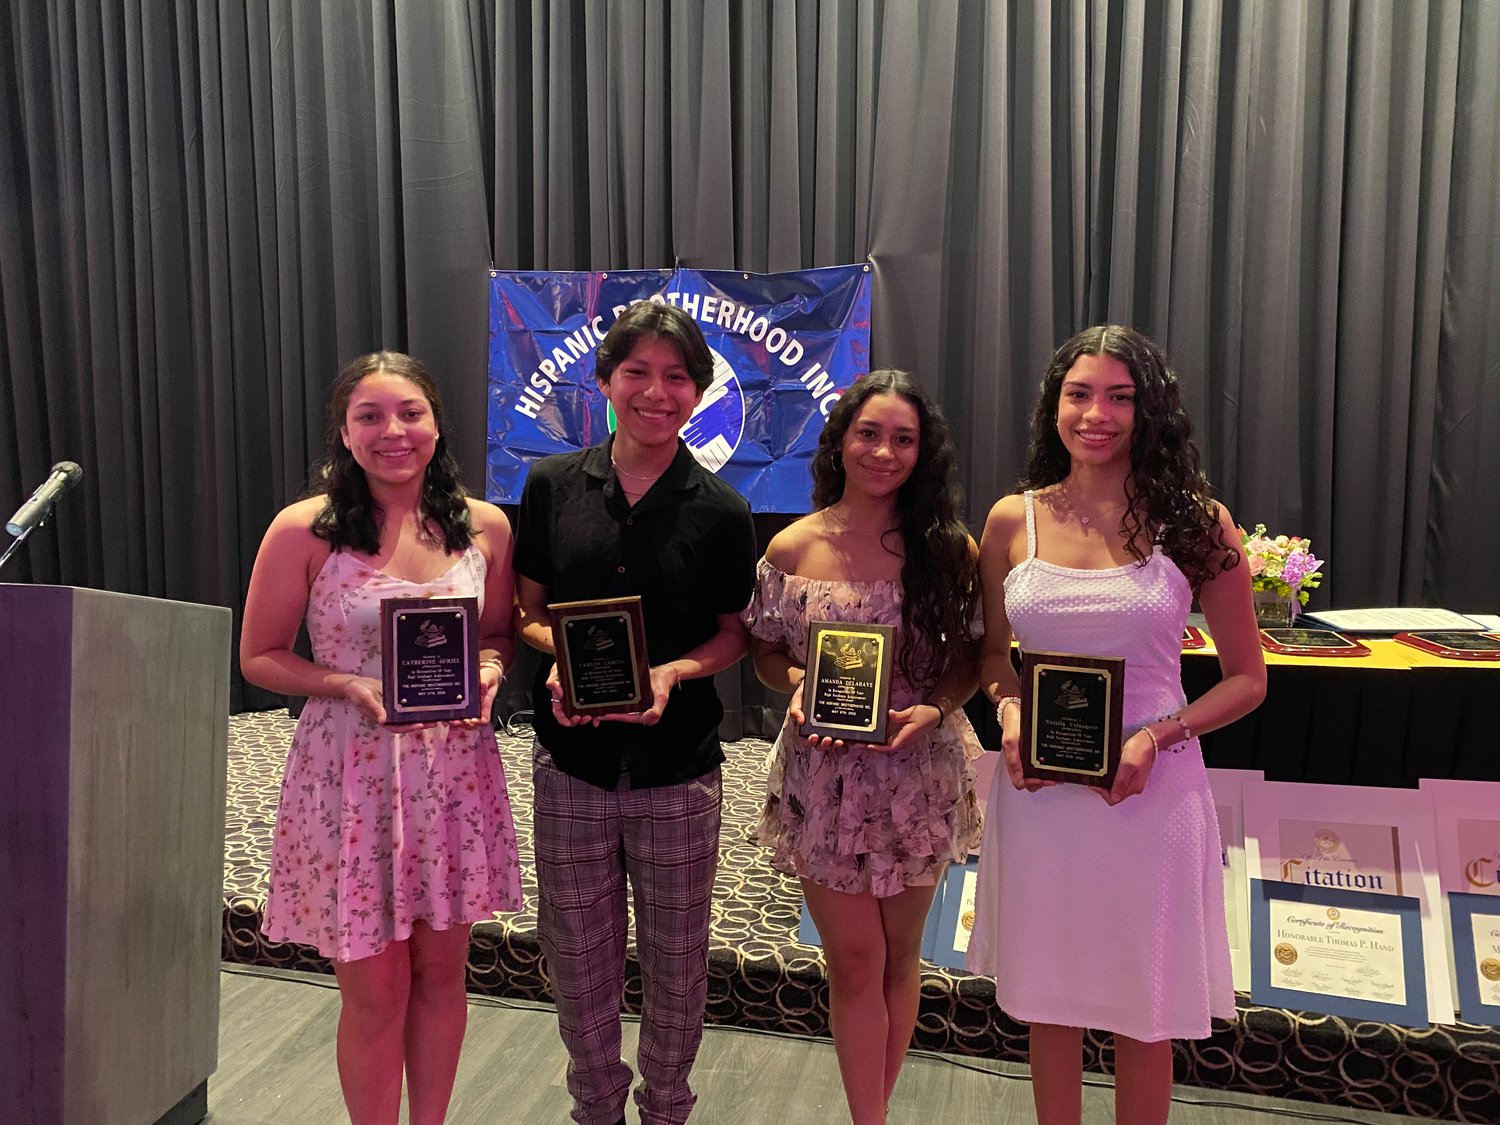 Catherine Suriel, Carlos Garcia Jr., Amanda Delahaye and Natalia Velasquez (left to right) were awarded scholarships by the Hispanic Brotherhood last Thursday.